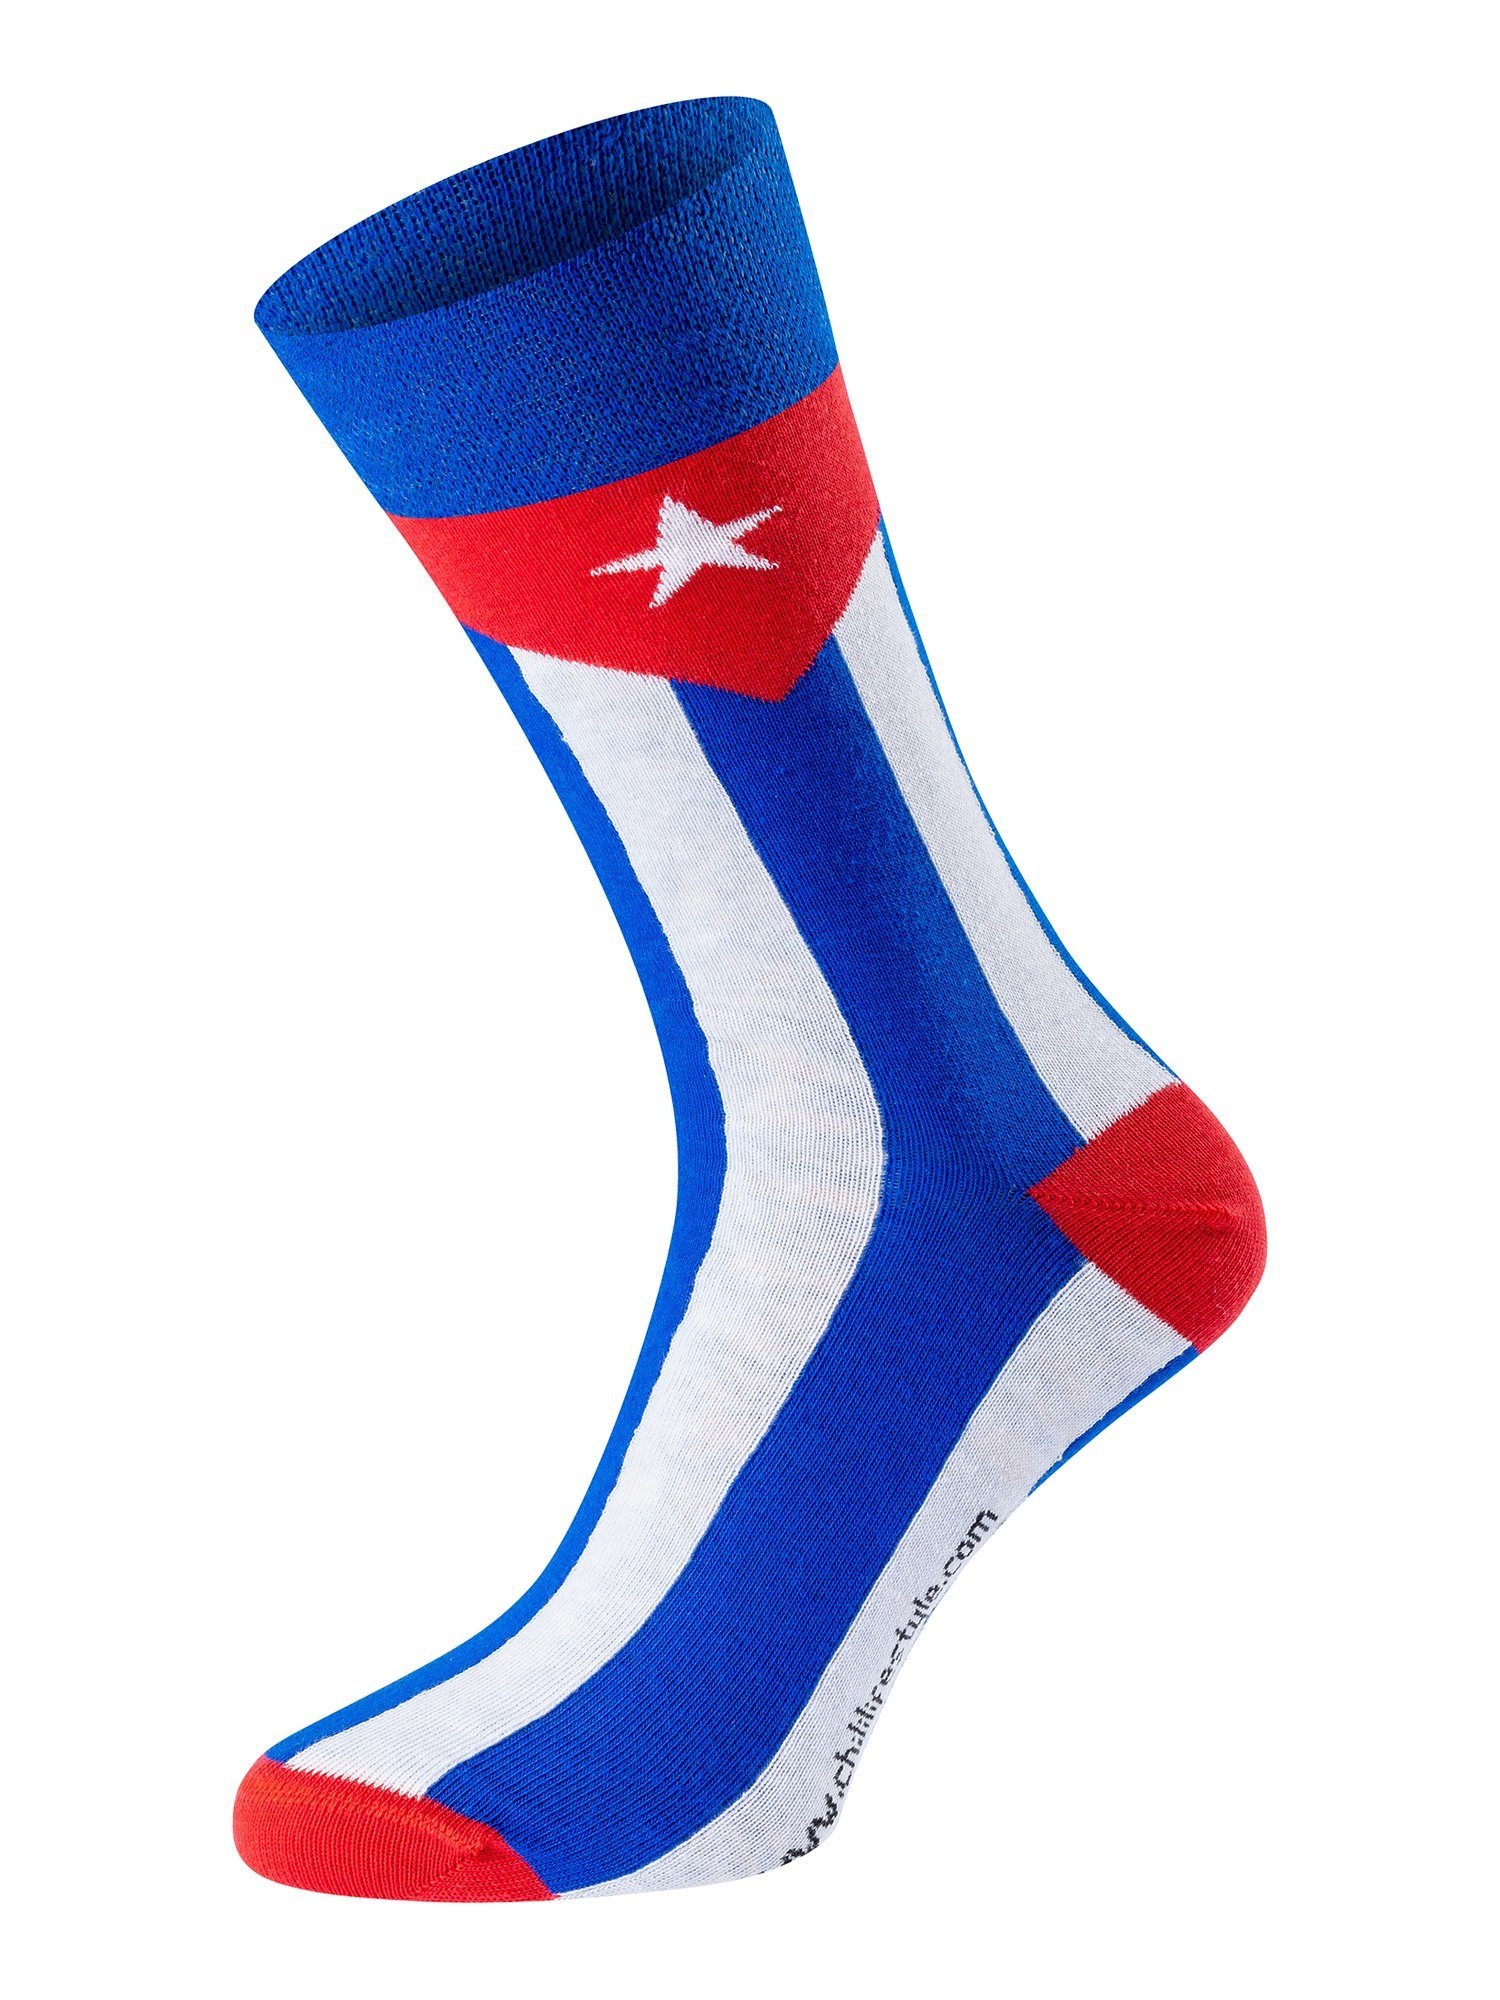 Freizeitsocken Banderole Lifestyle Fidel Socks Chili Leisure